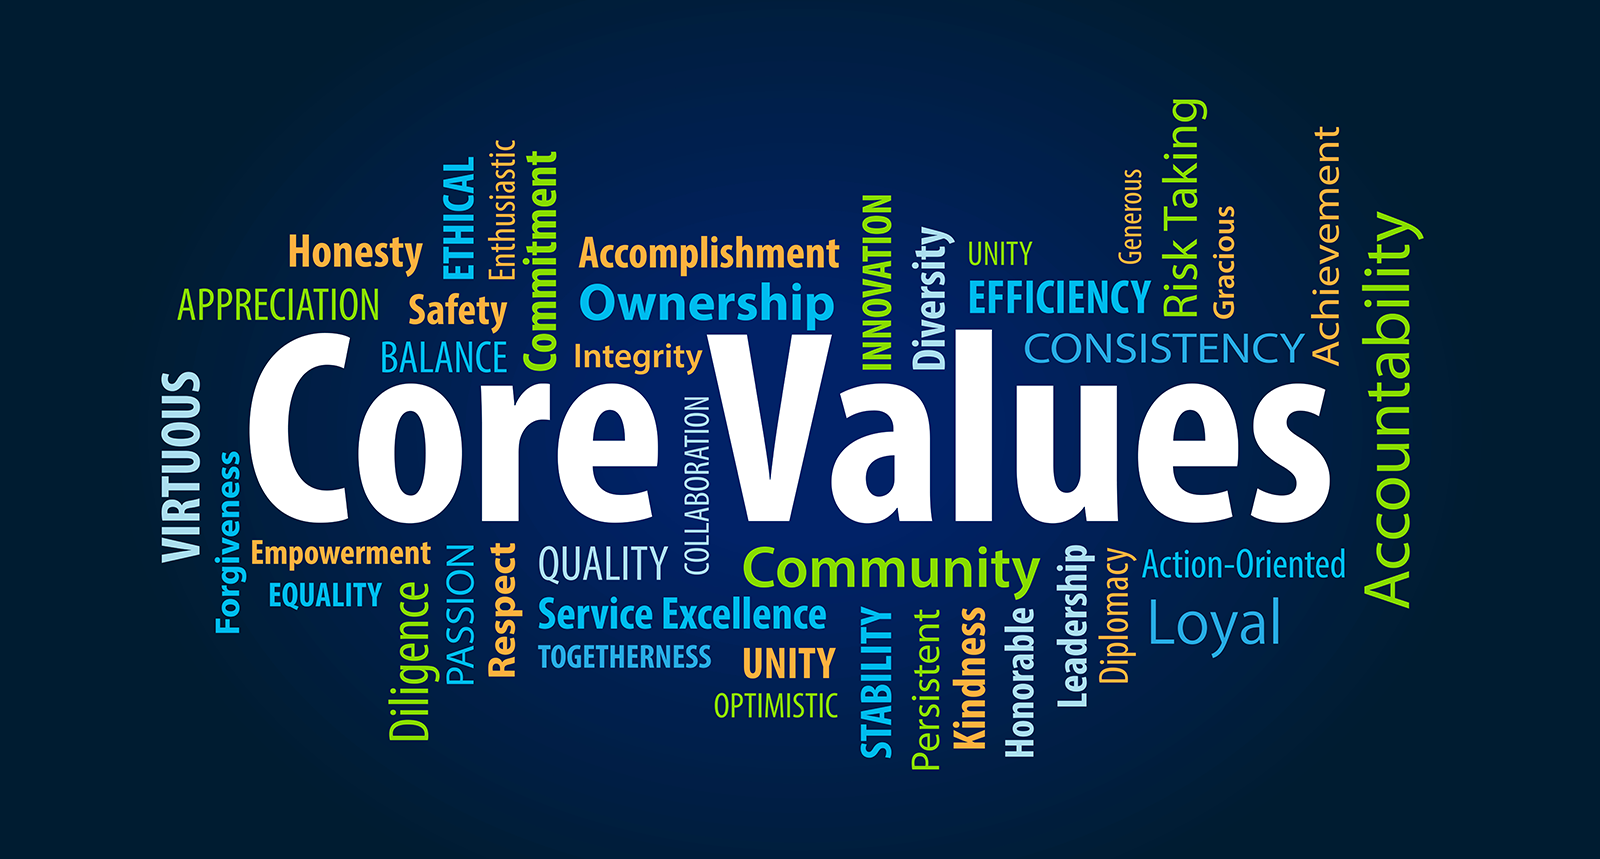 Value in words. Core values. Core Valuation. Culture values фото. BP Core value.